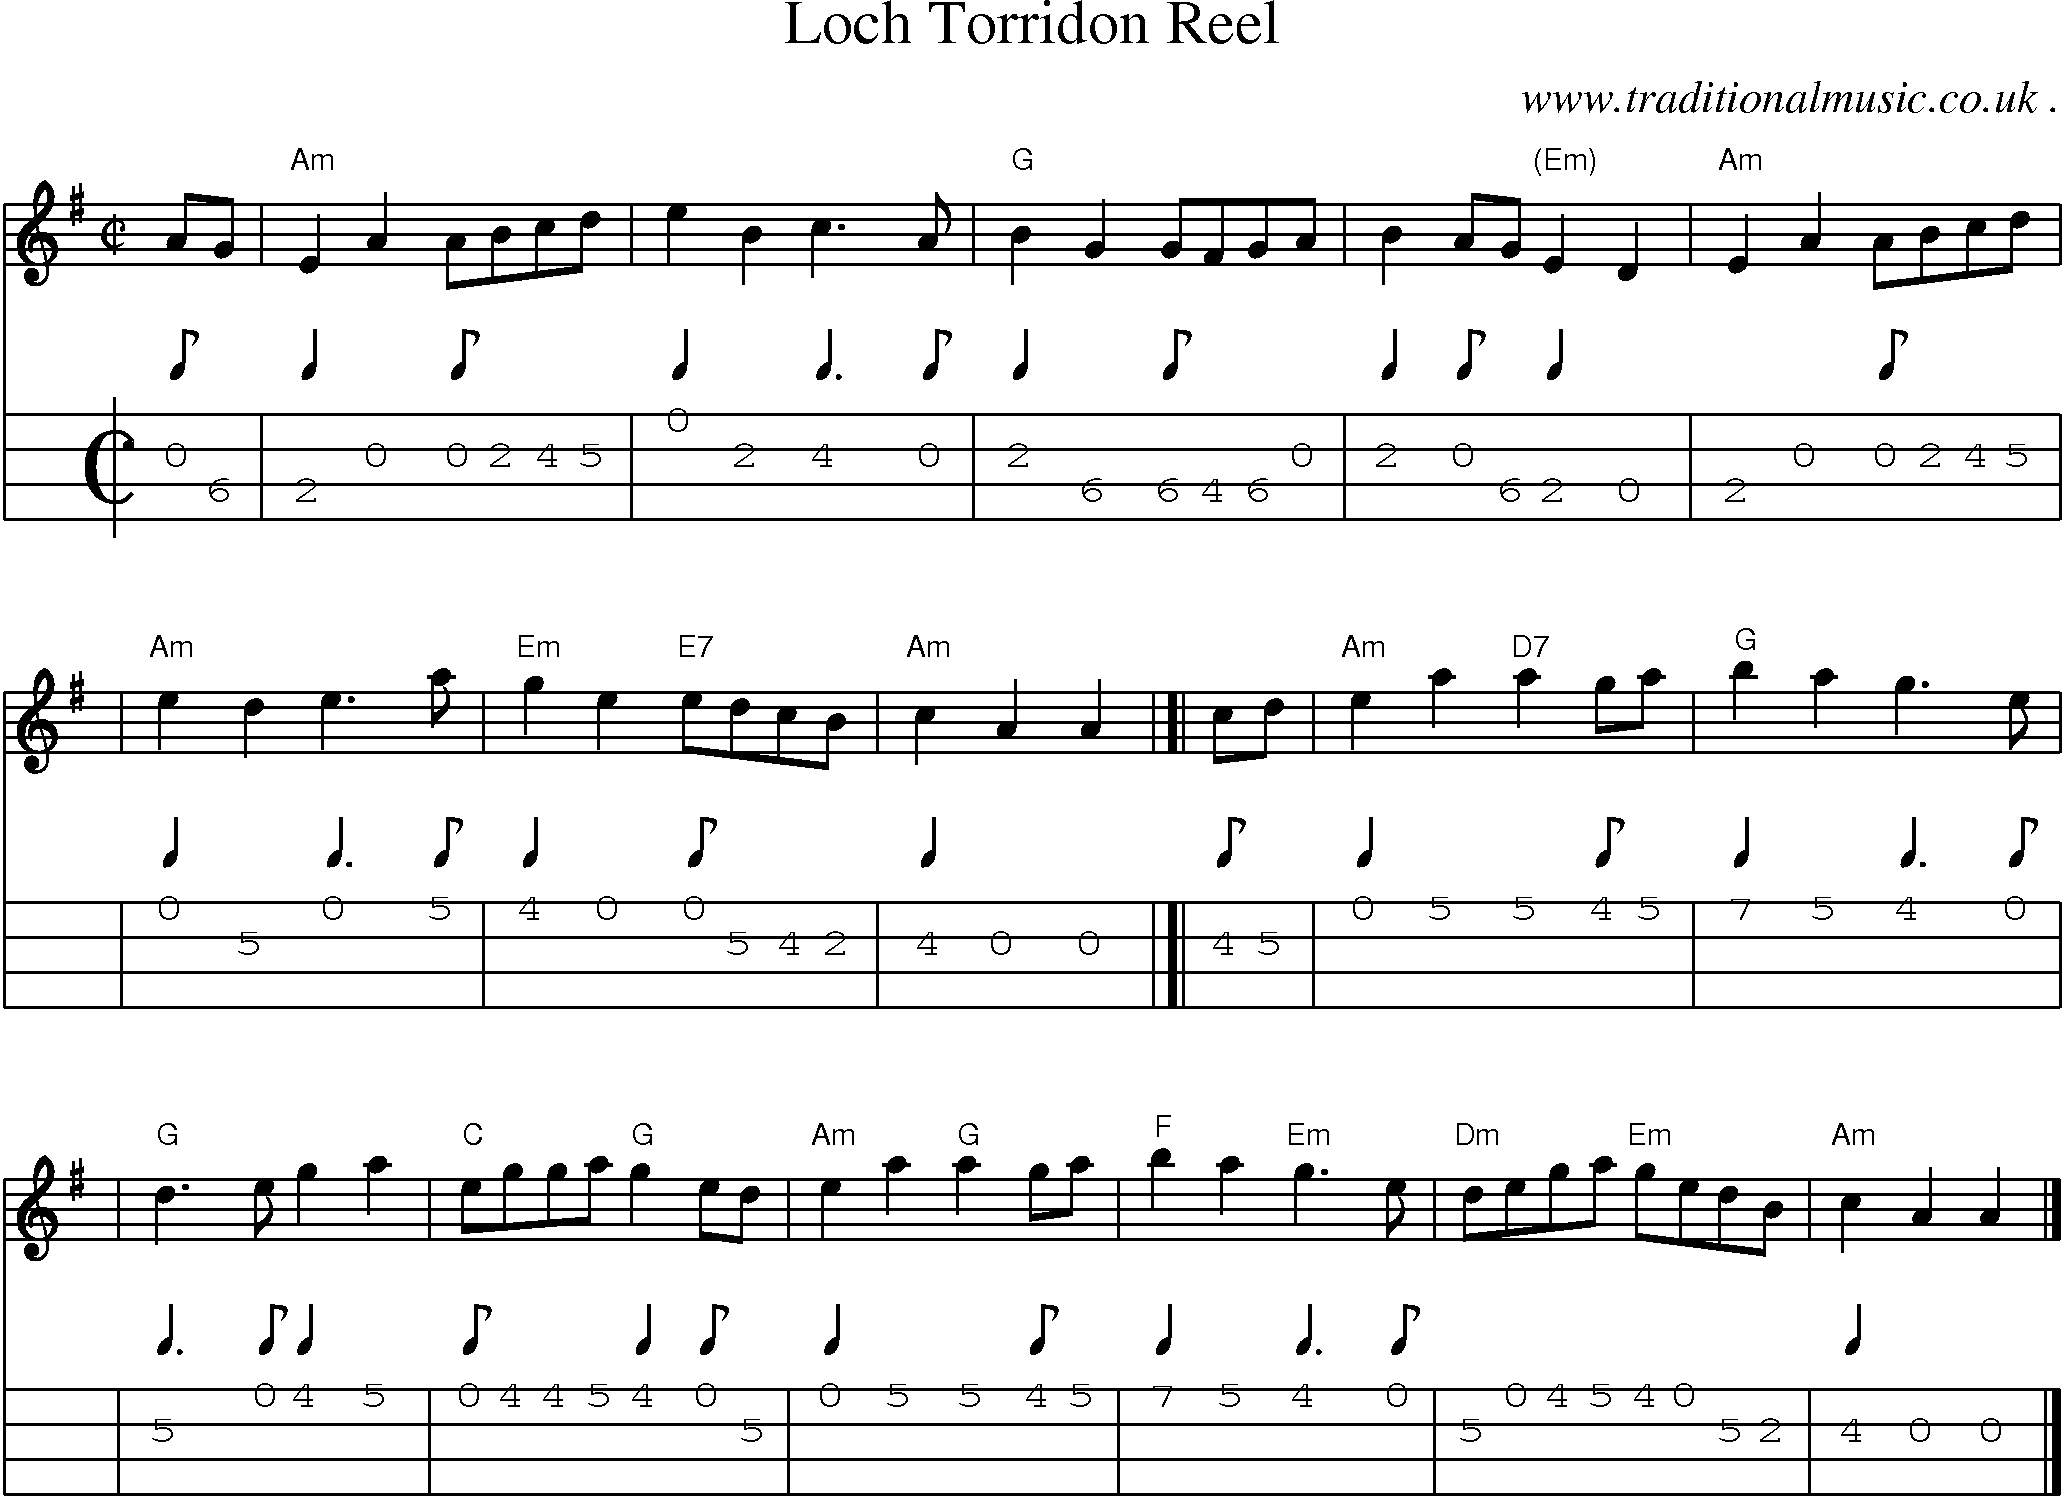 Sheet-music  score, Chords and Mandolin Tabs for Loch Torridon Reel